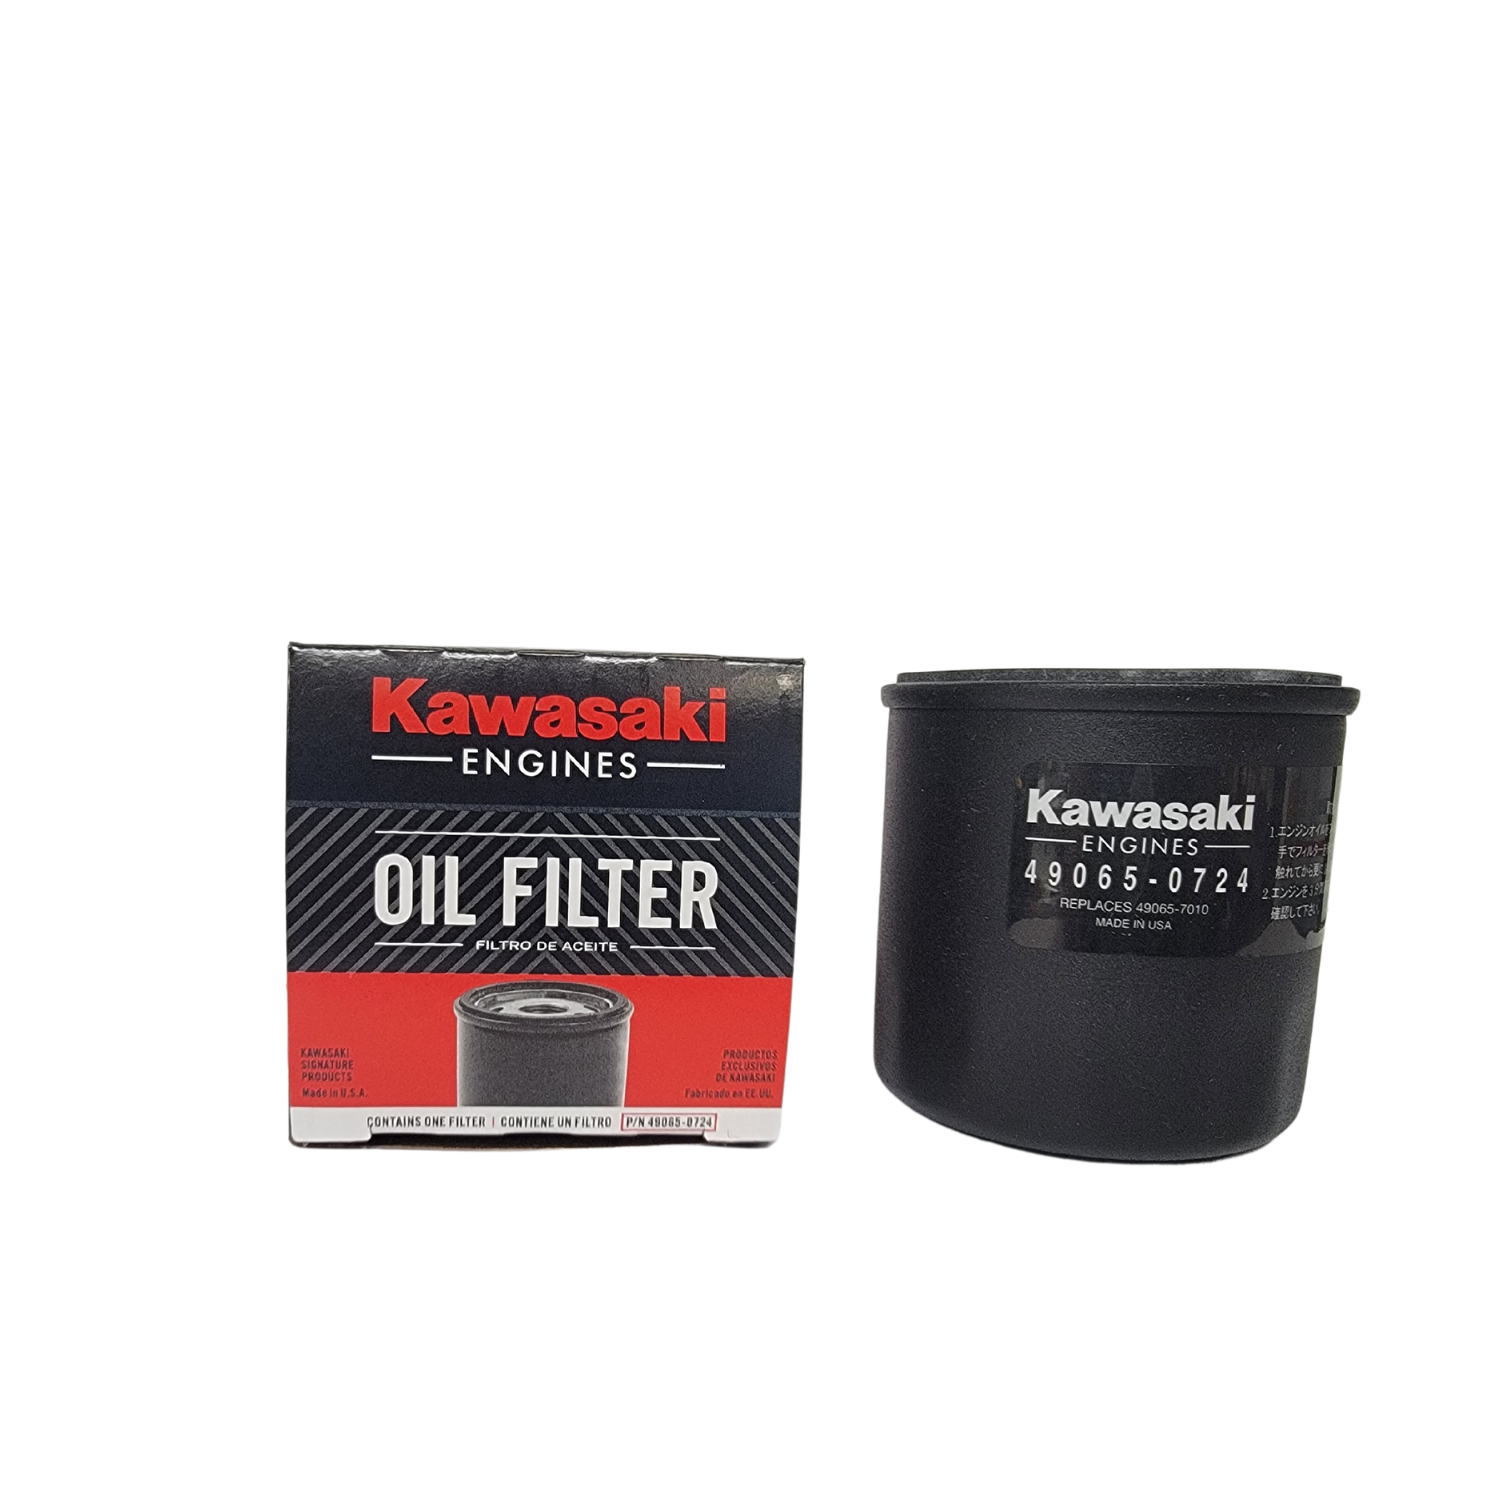 Kawasaki Oil Filter | 49065-0724 - Main Street Mower | Winter Garden, Ocala, Clermont